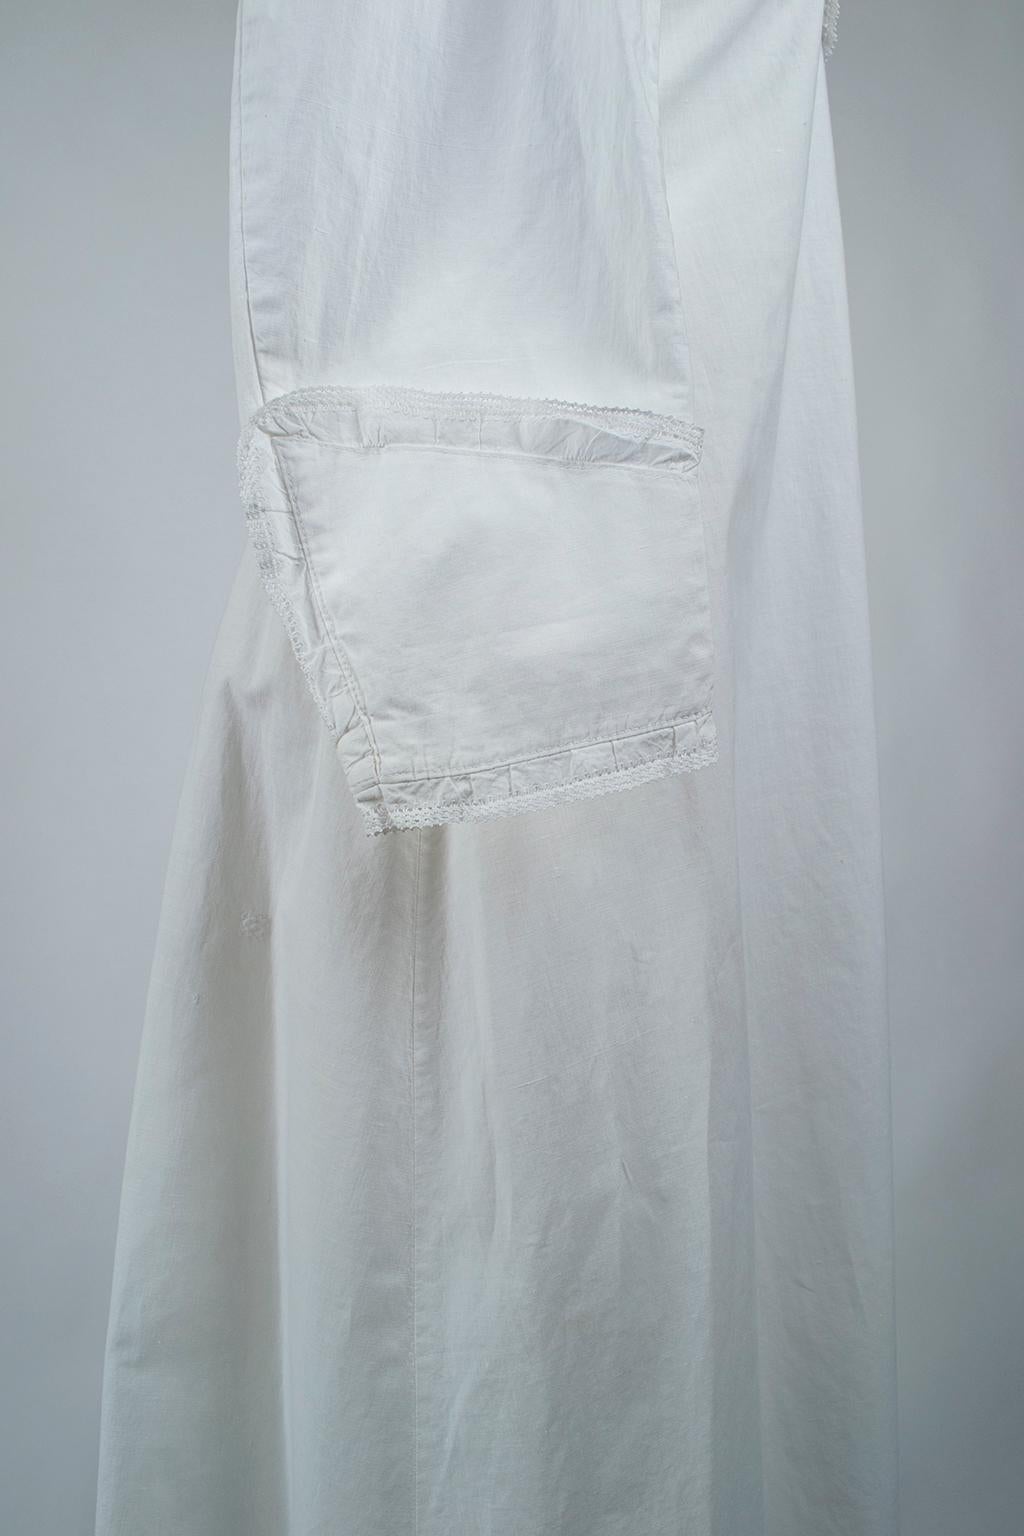 Original Civil War White Western Prairie Homesteader Shirtwaist Dress -XS, 1860s For Sale 2